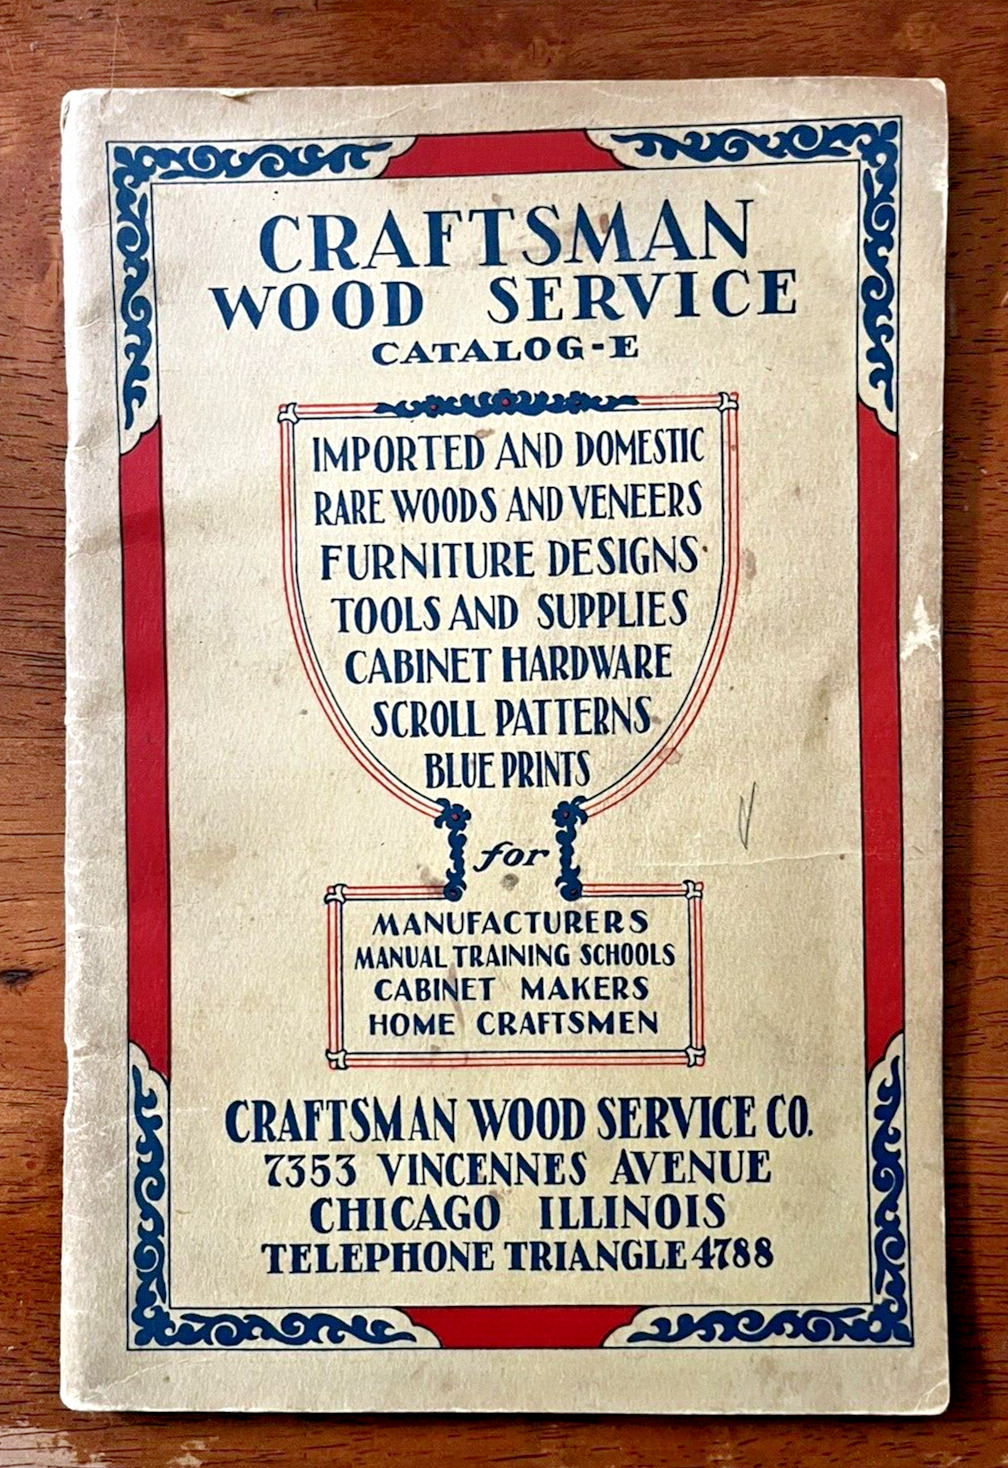 Vintage Craftsman Wood Service Catalog-E, 1932